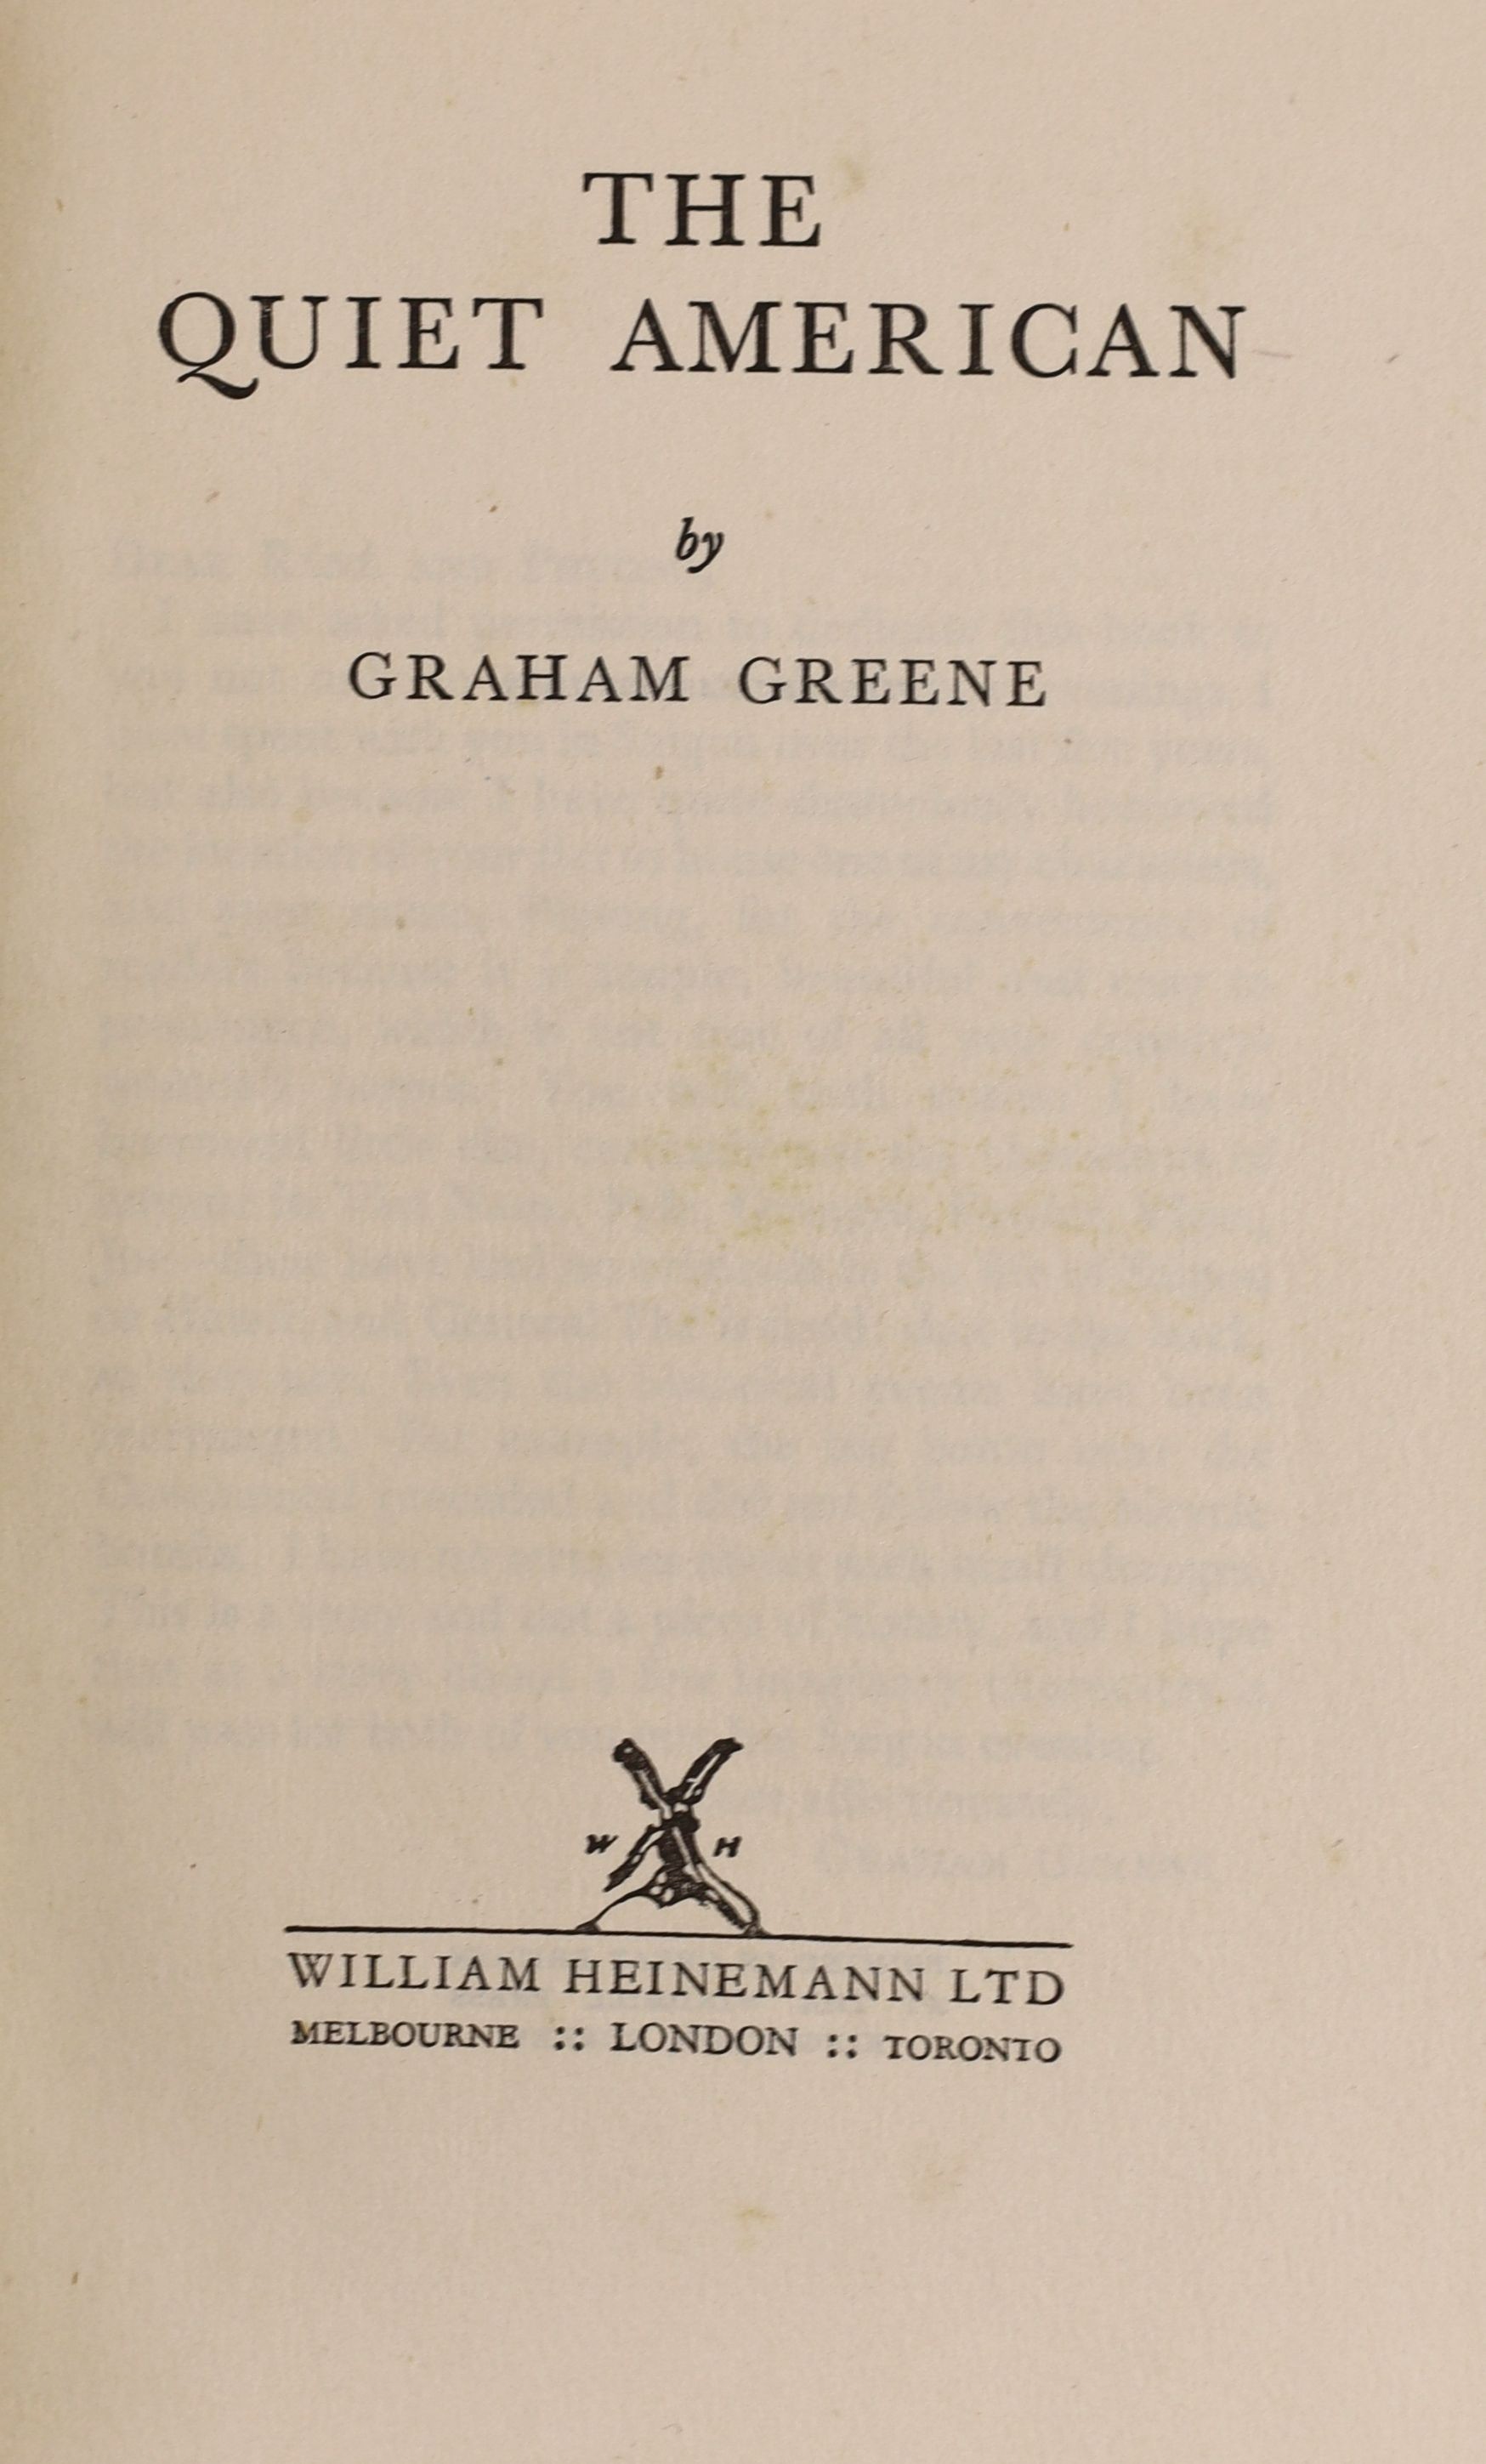 Greene, Graham - The Quiet American, 1st ed. original cloth with unclipped d/j. 8vo. William Heinemann Ltd, London, 1955.